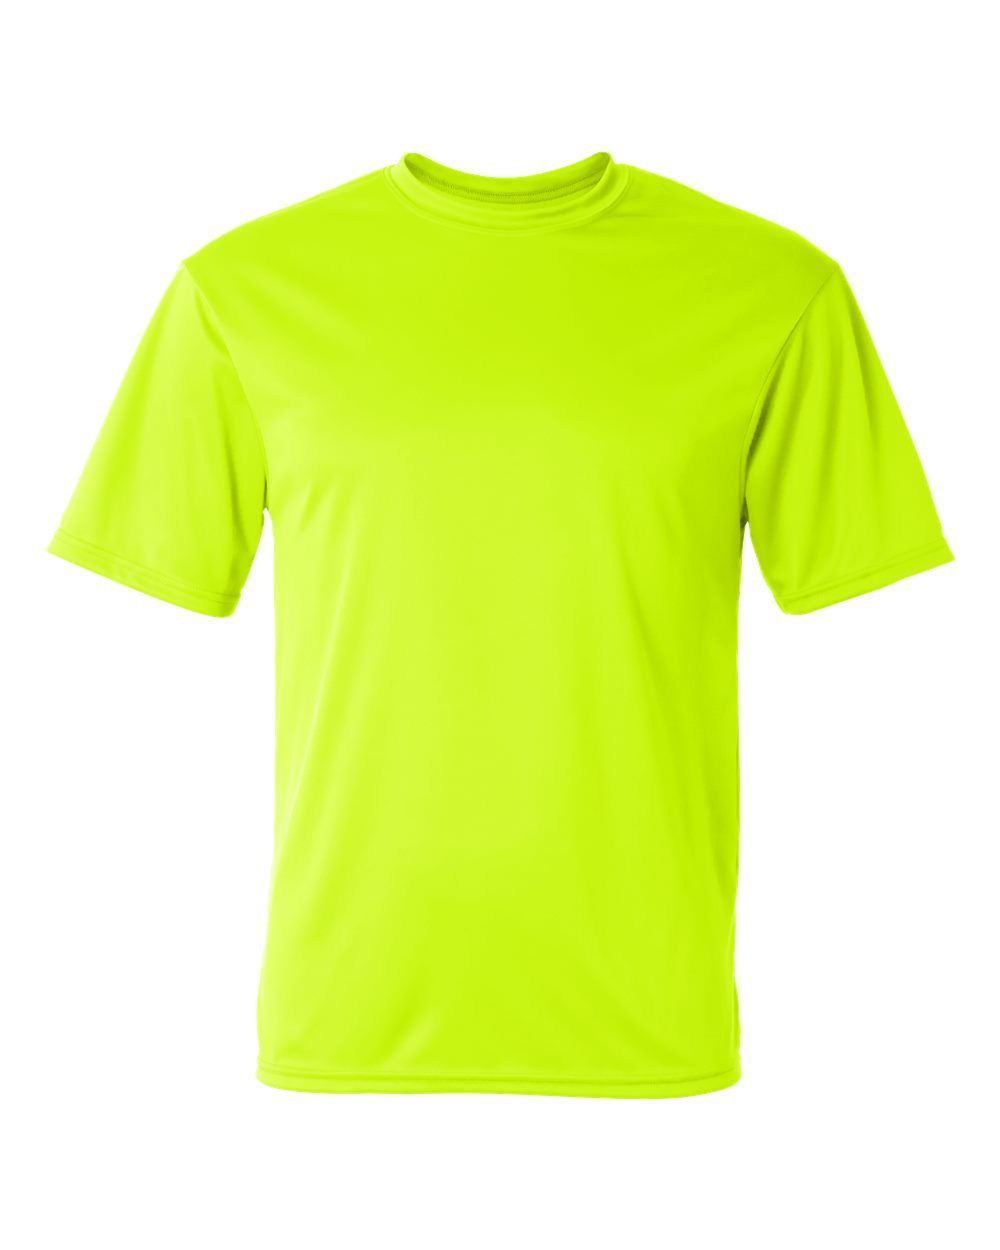 C2 Sport 5100 Performance Shirt :: Safety Yellow, Size 2XL